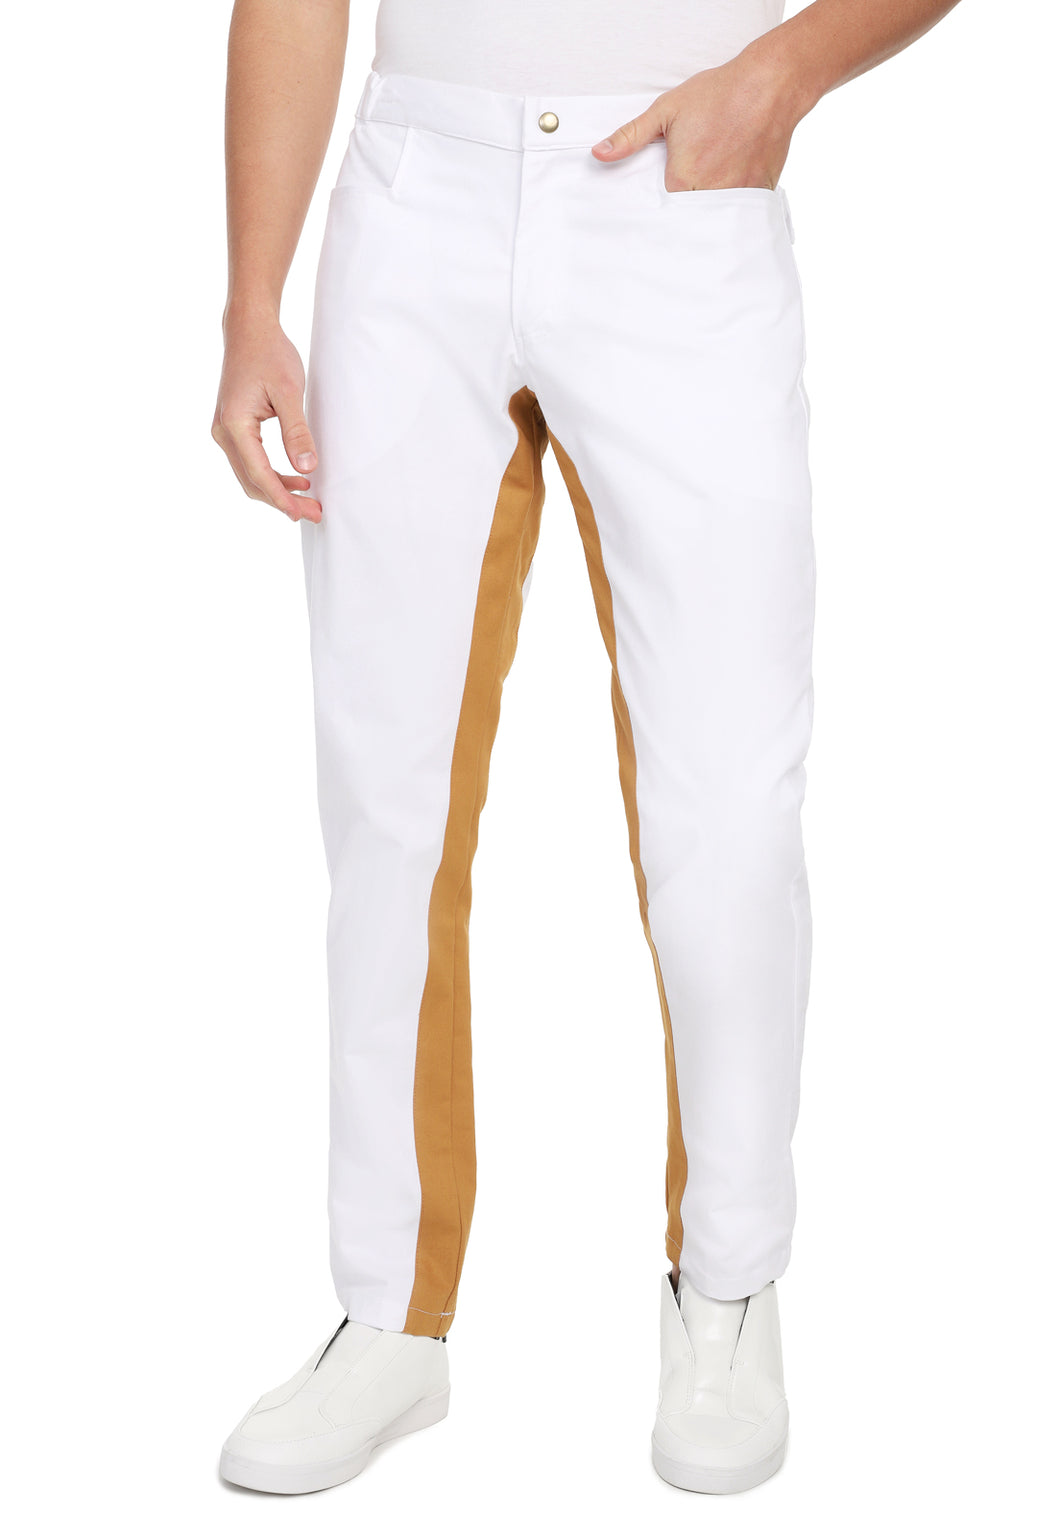 Pantalón Comfort Street style Blanco y mostaza Moda masculina hecha en Colombia